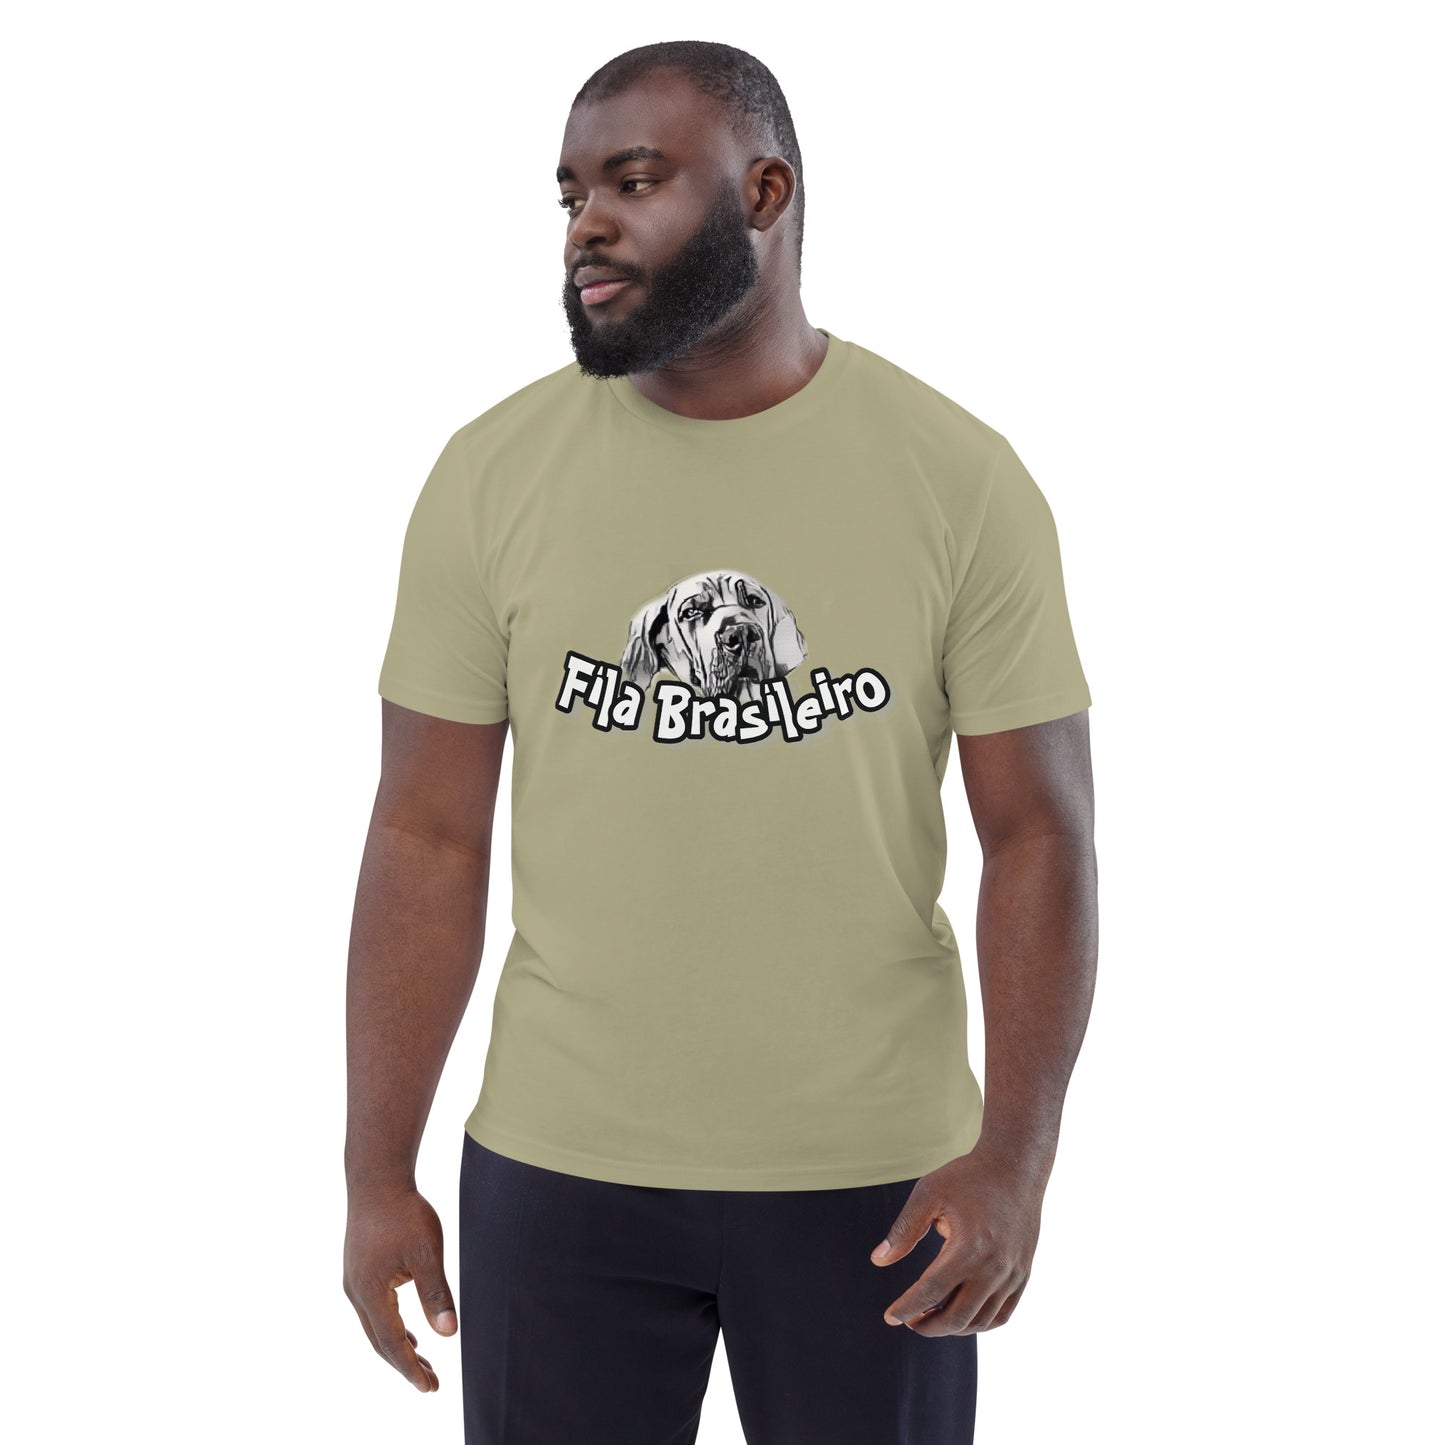 Fila Brasileiro organic cotton t-shirt